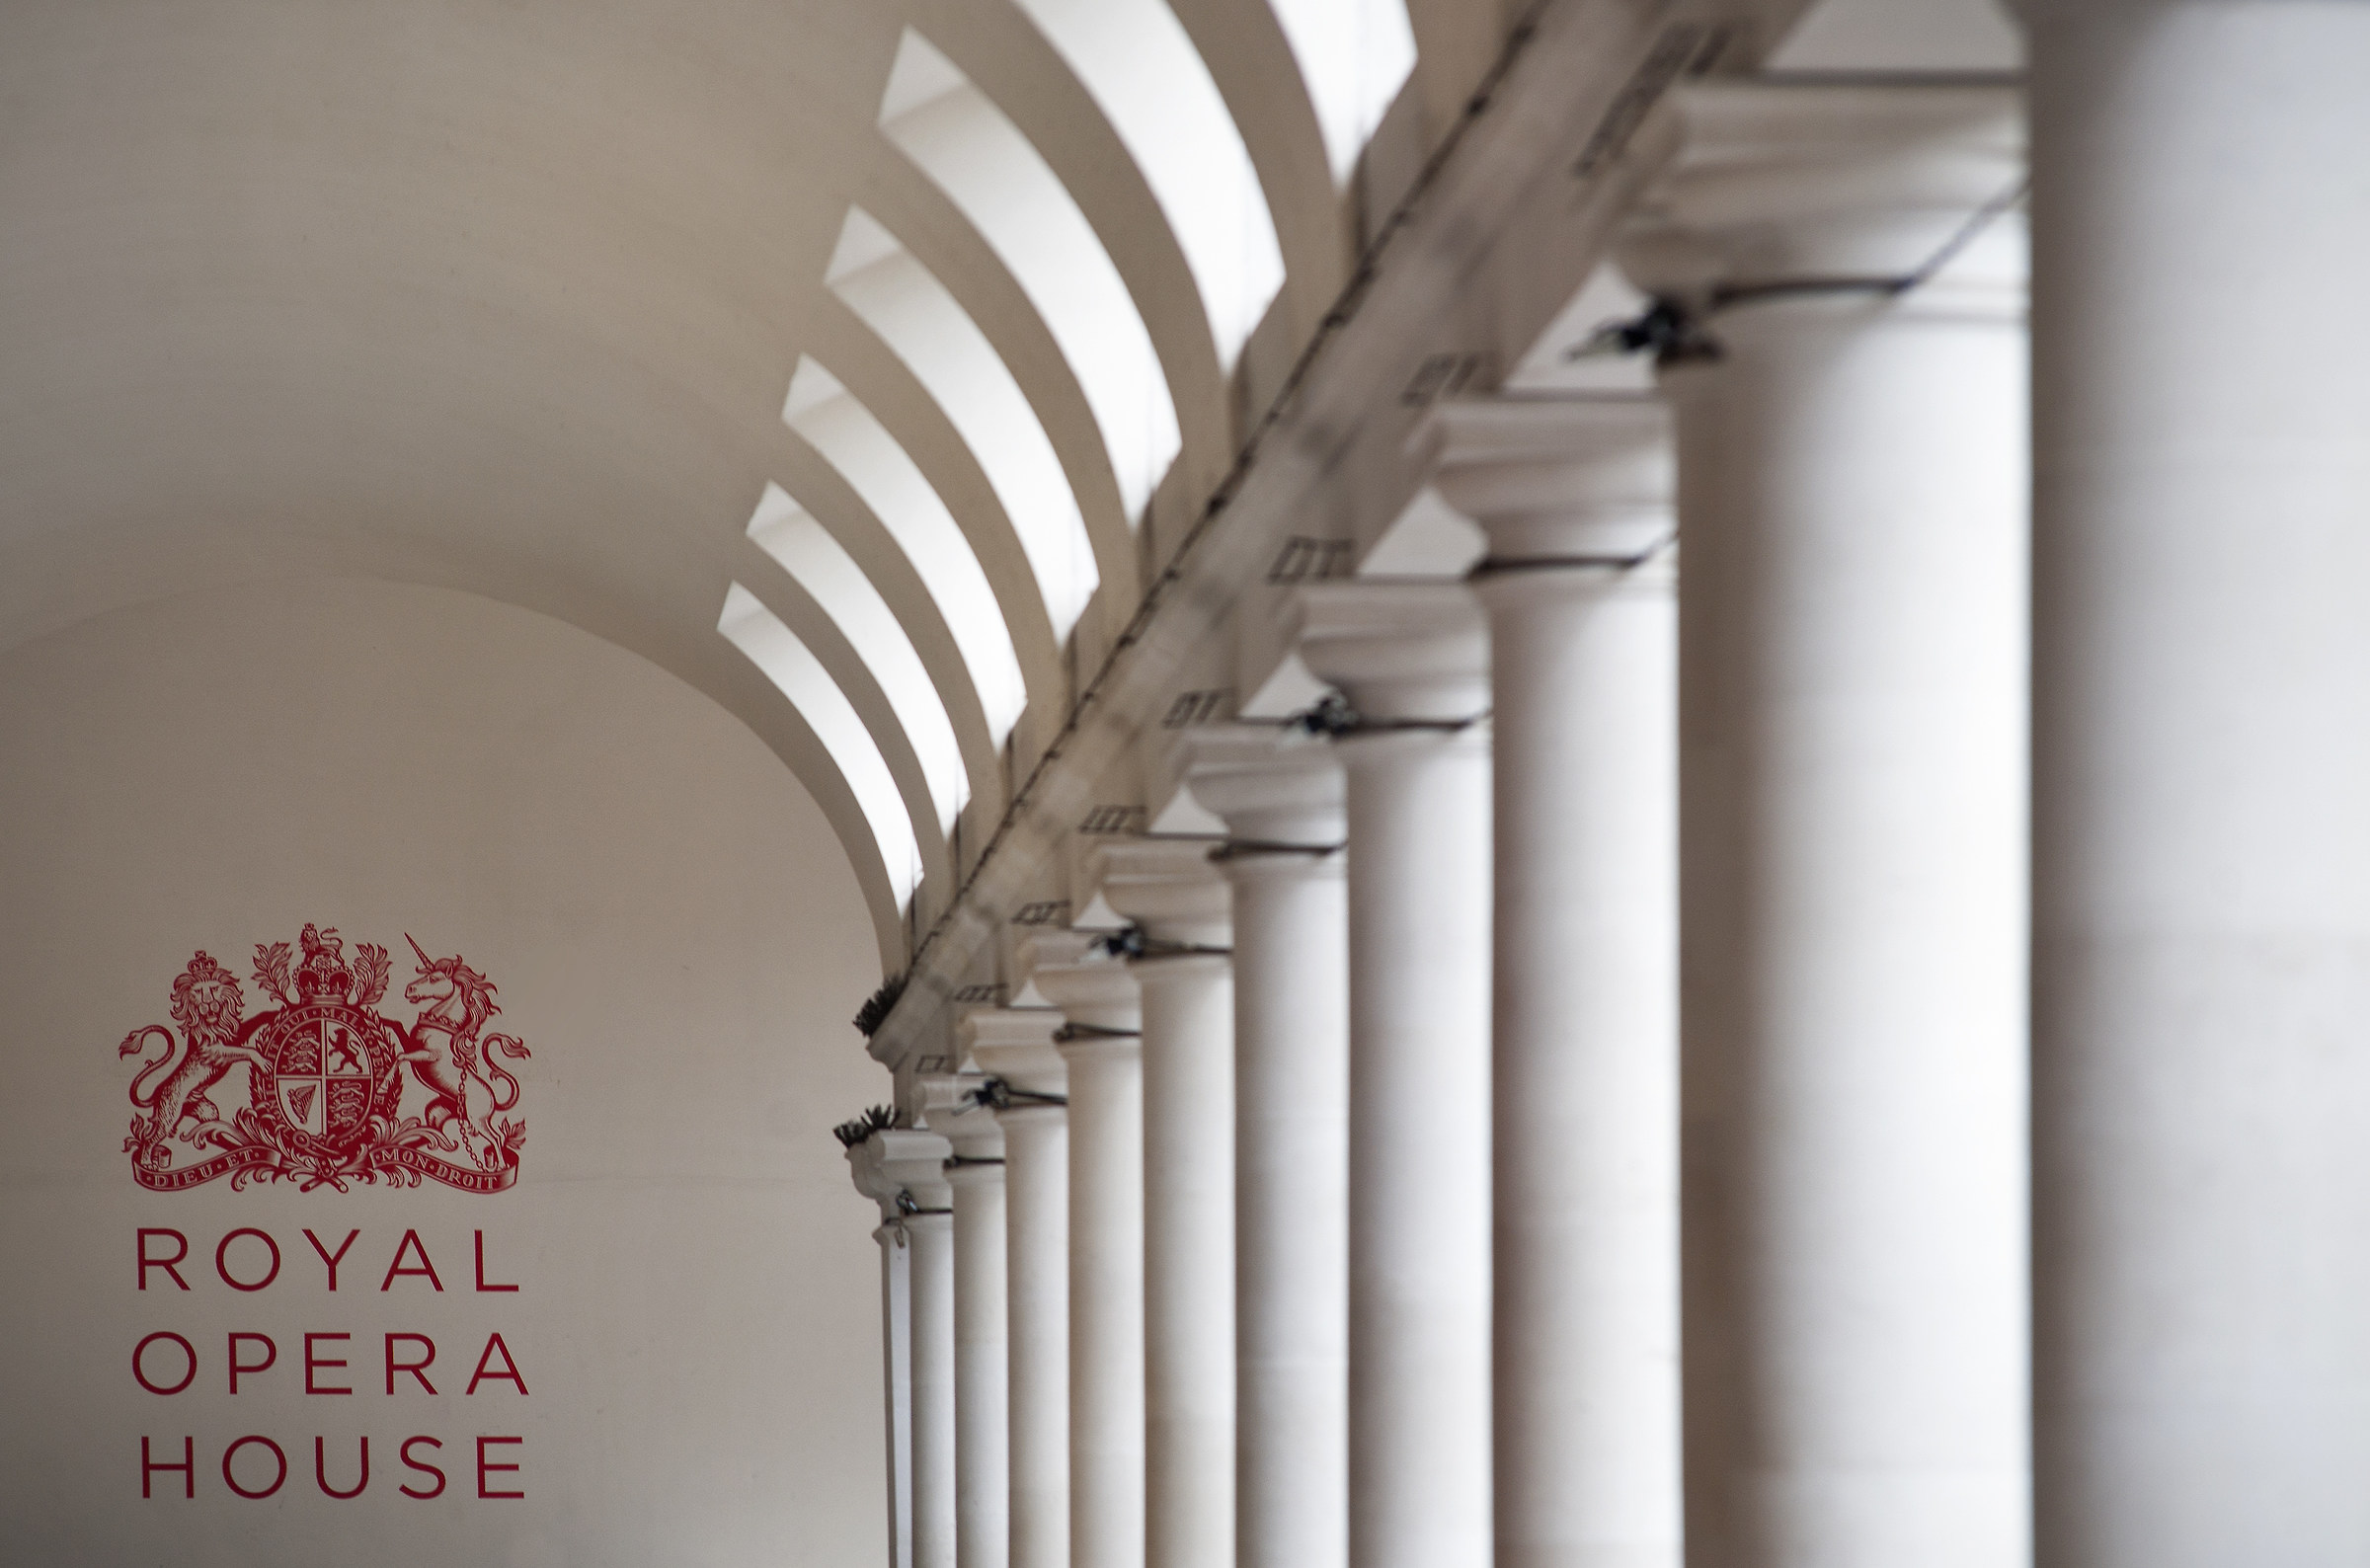 The White Pillars of the Royal Opera House...